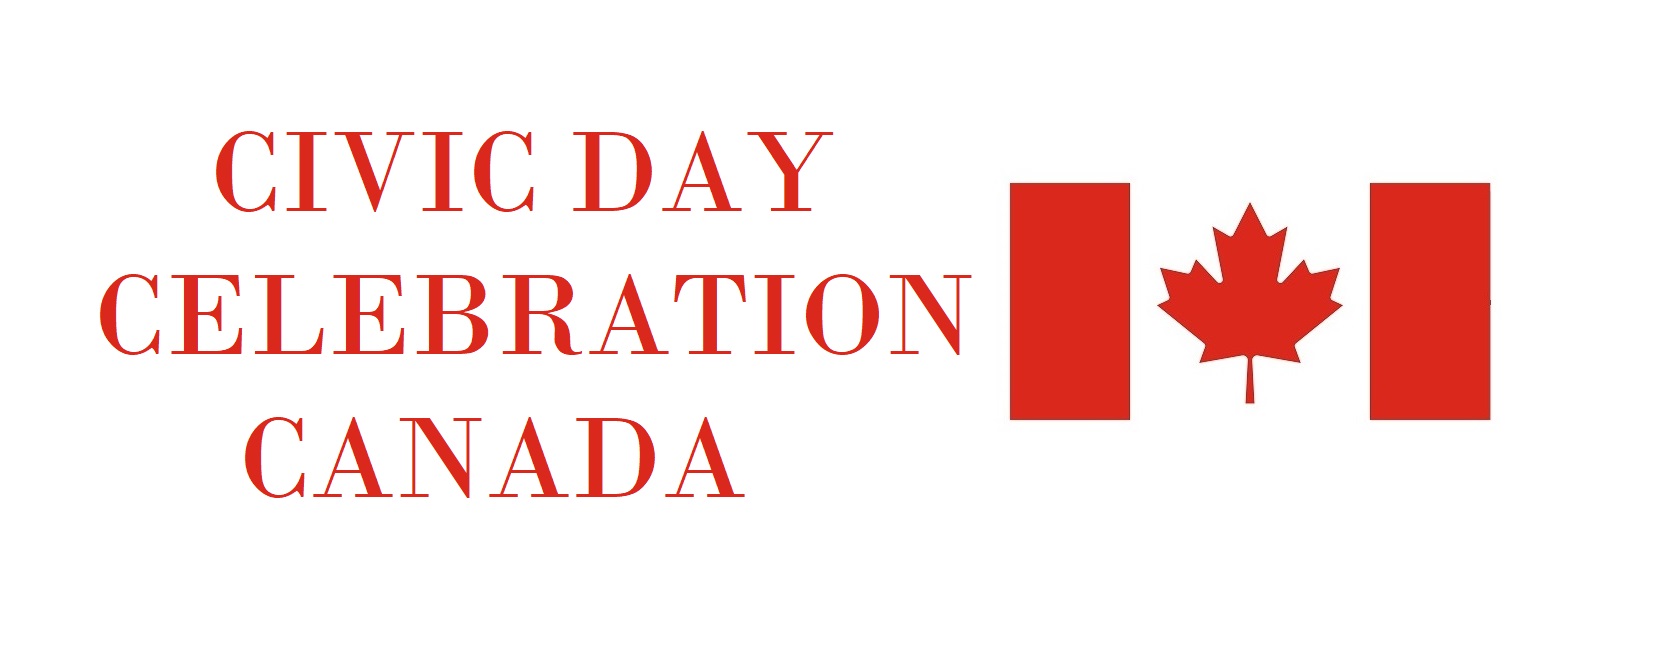 Civic Day National Holiday, Canada